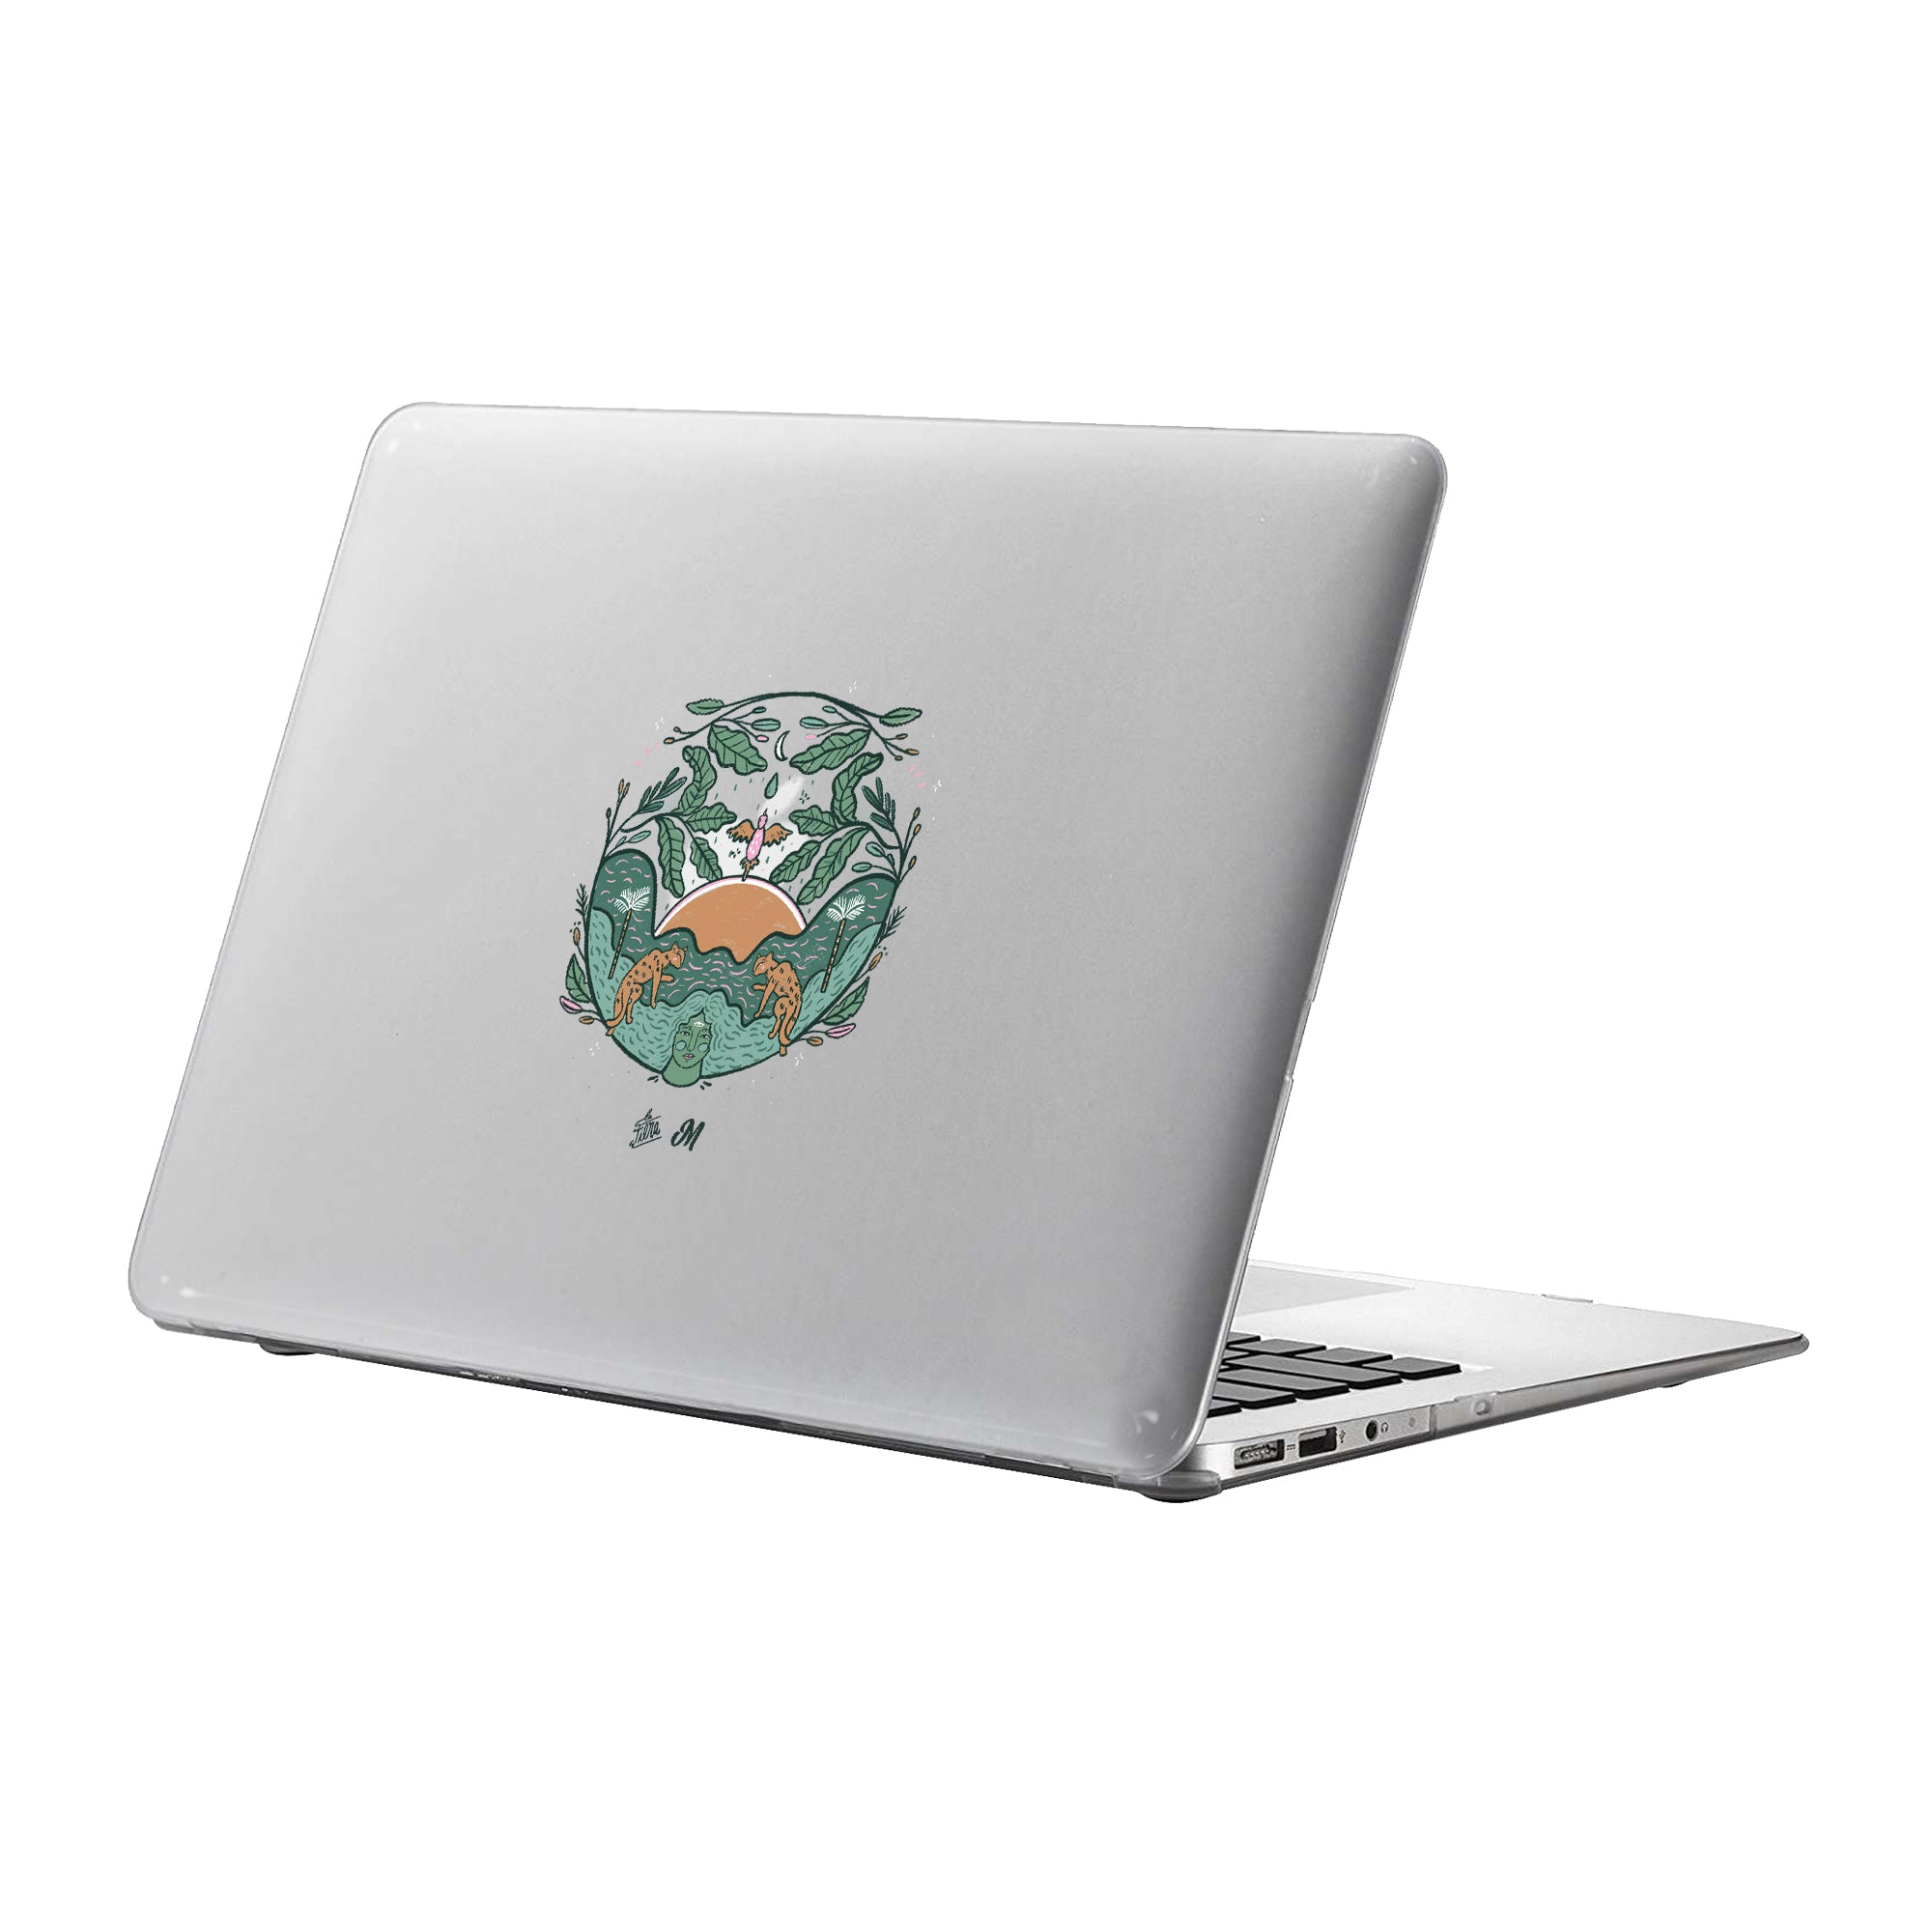 You Deserve Joy MacBook Case - Mandala Cases